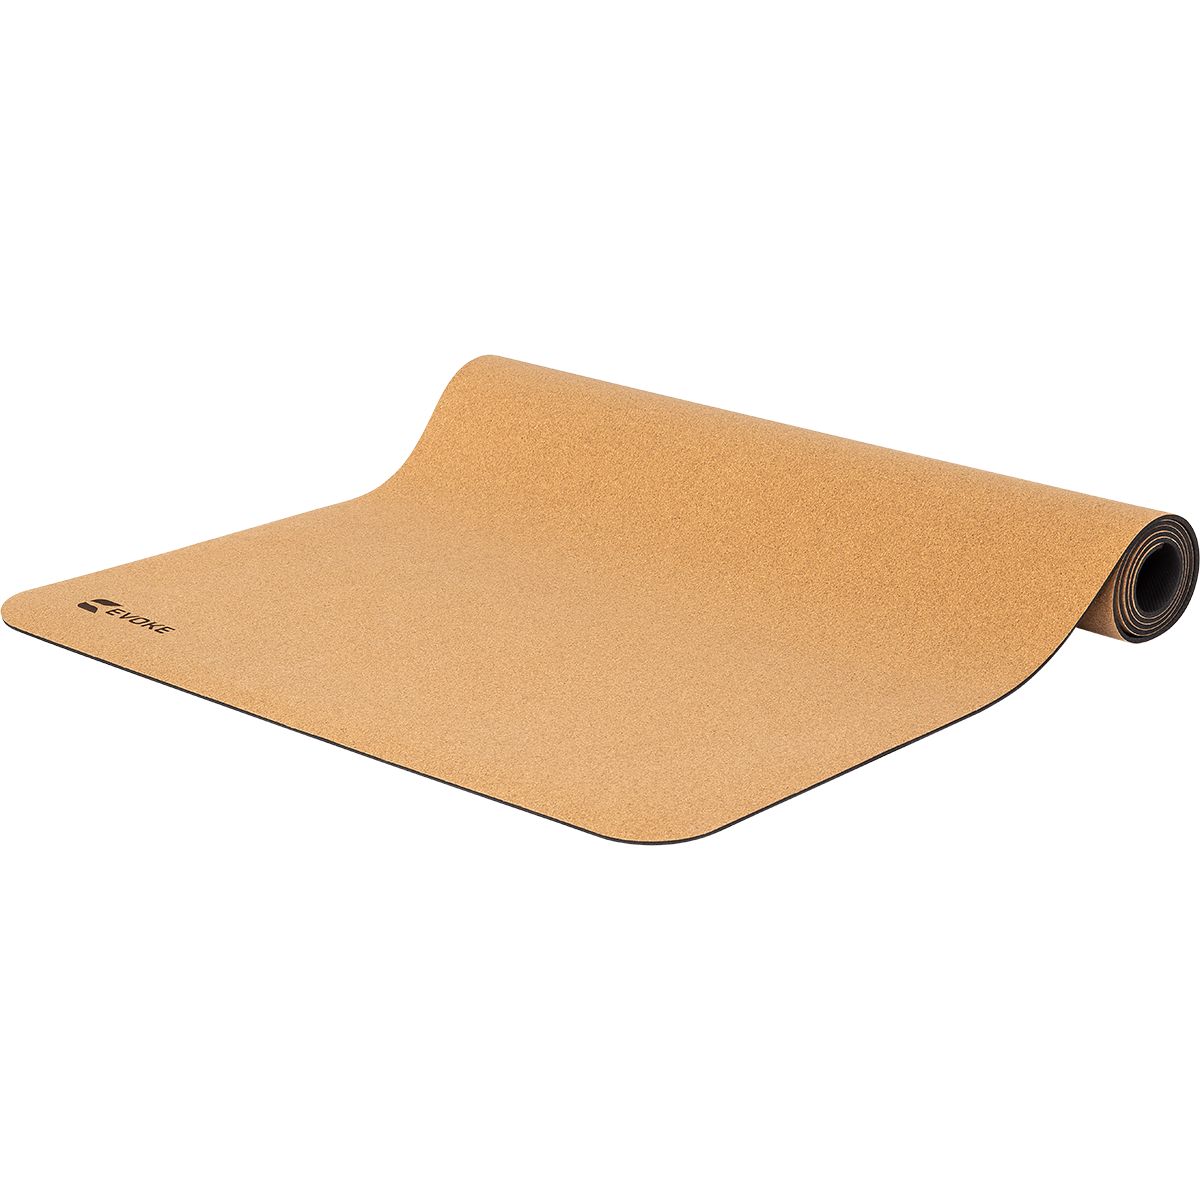 Pro Cork Yoga Mat - Grounding & Incredible Padding